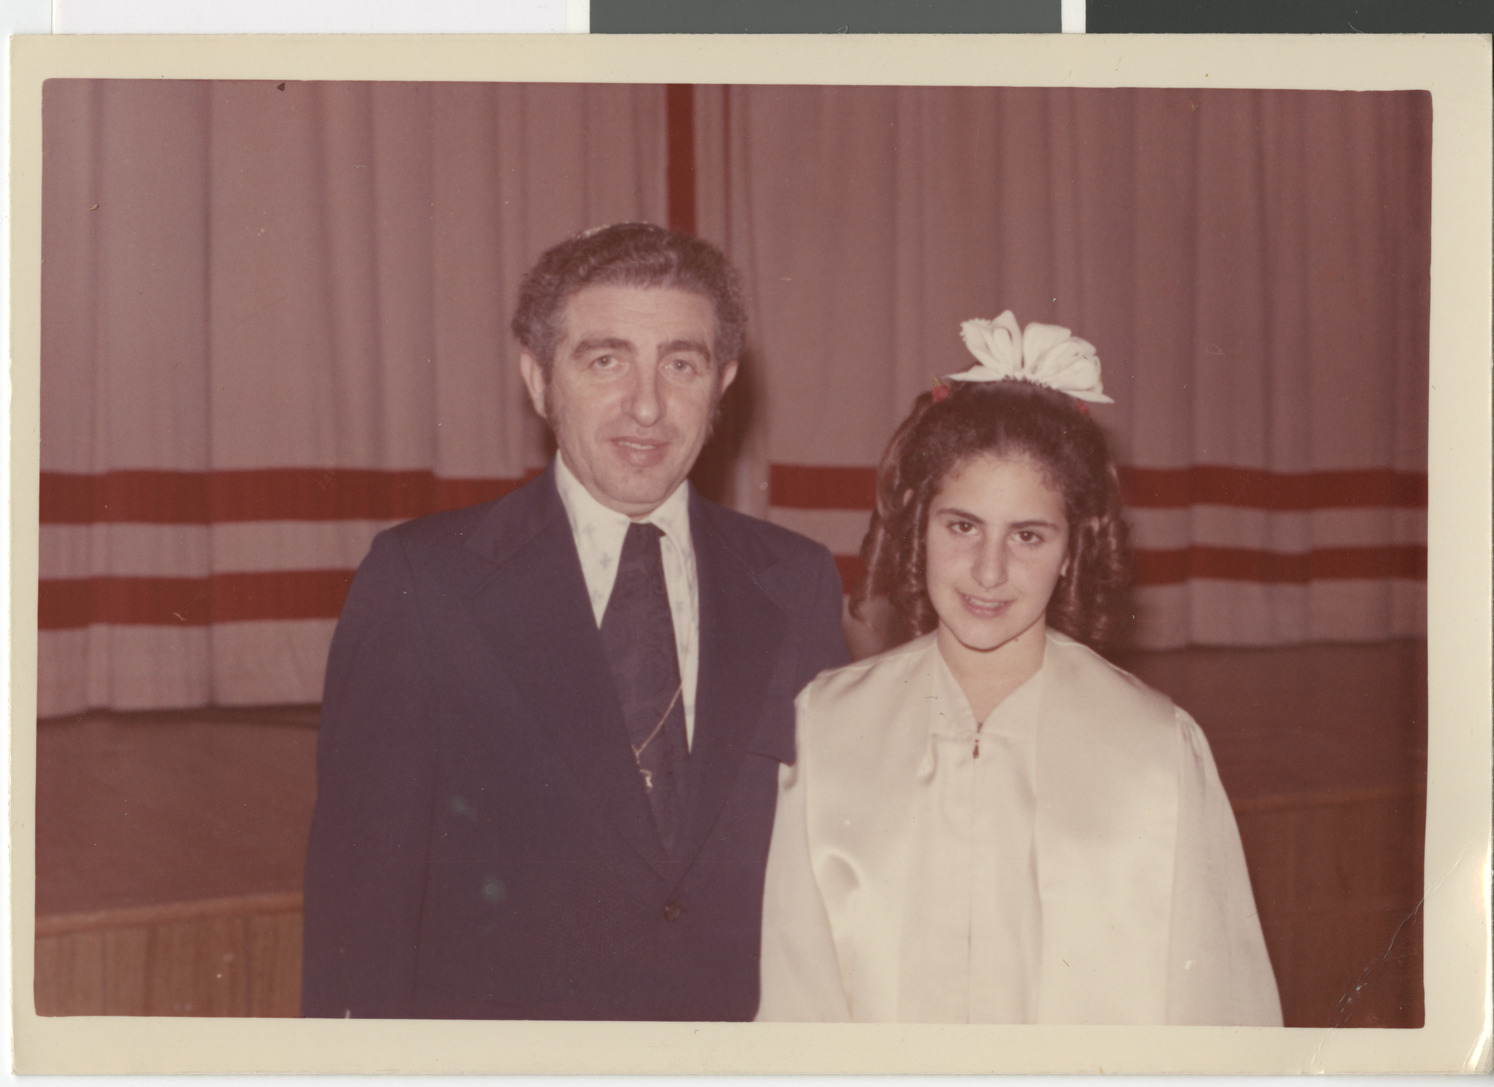 Photograph of Cantor Joseph Kohn and Lori Chenin at bat mitzvah for Lori Chenin, February 3, 1973